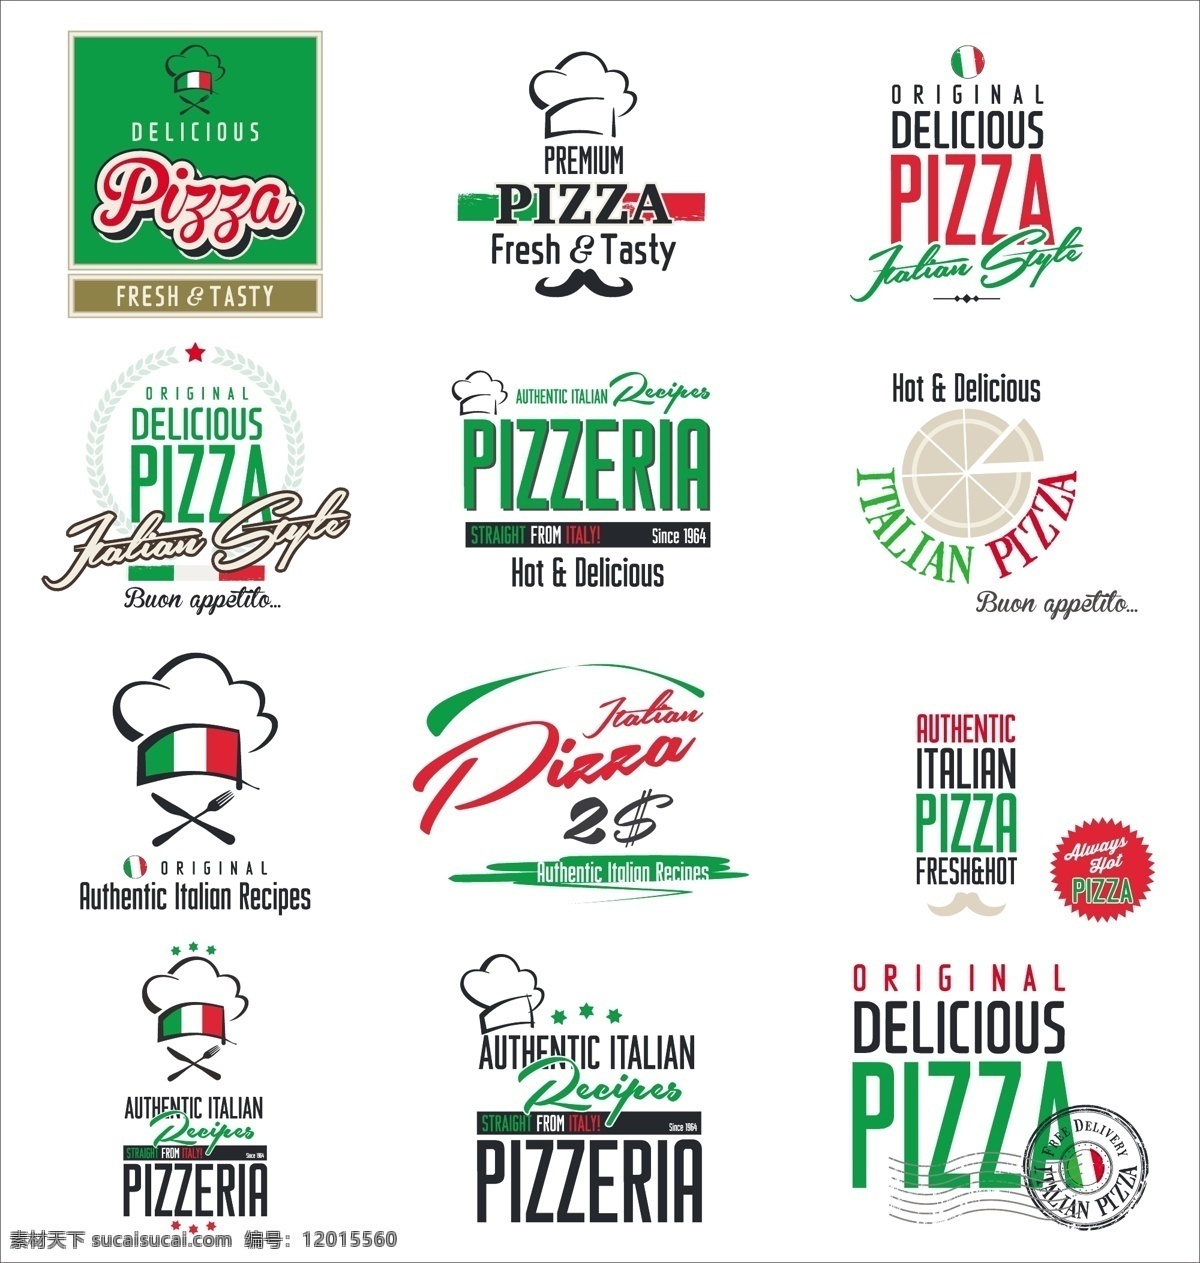 pizza 披萨 比萨 馅饼 意大利披萨 西餐 披萨图标 披萨logo 披萨设计 披萨标志 时尚背景 绚丽背景 背景素材 背景图案 矢量背景 背景设计 抽象背景 抽象设计 卡通背景 矢量设计 卡通设计 艺术设计 餐饮美食 生活百科 矢量